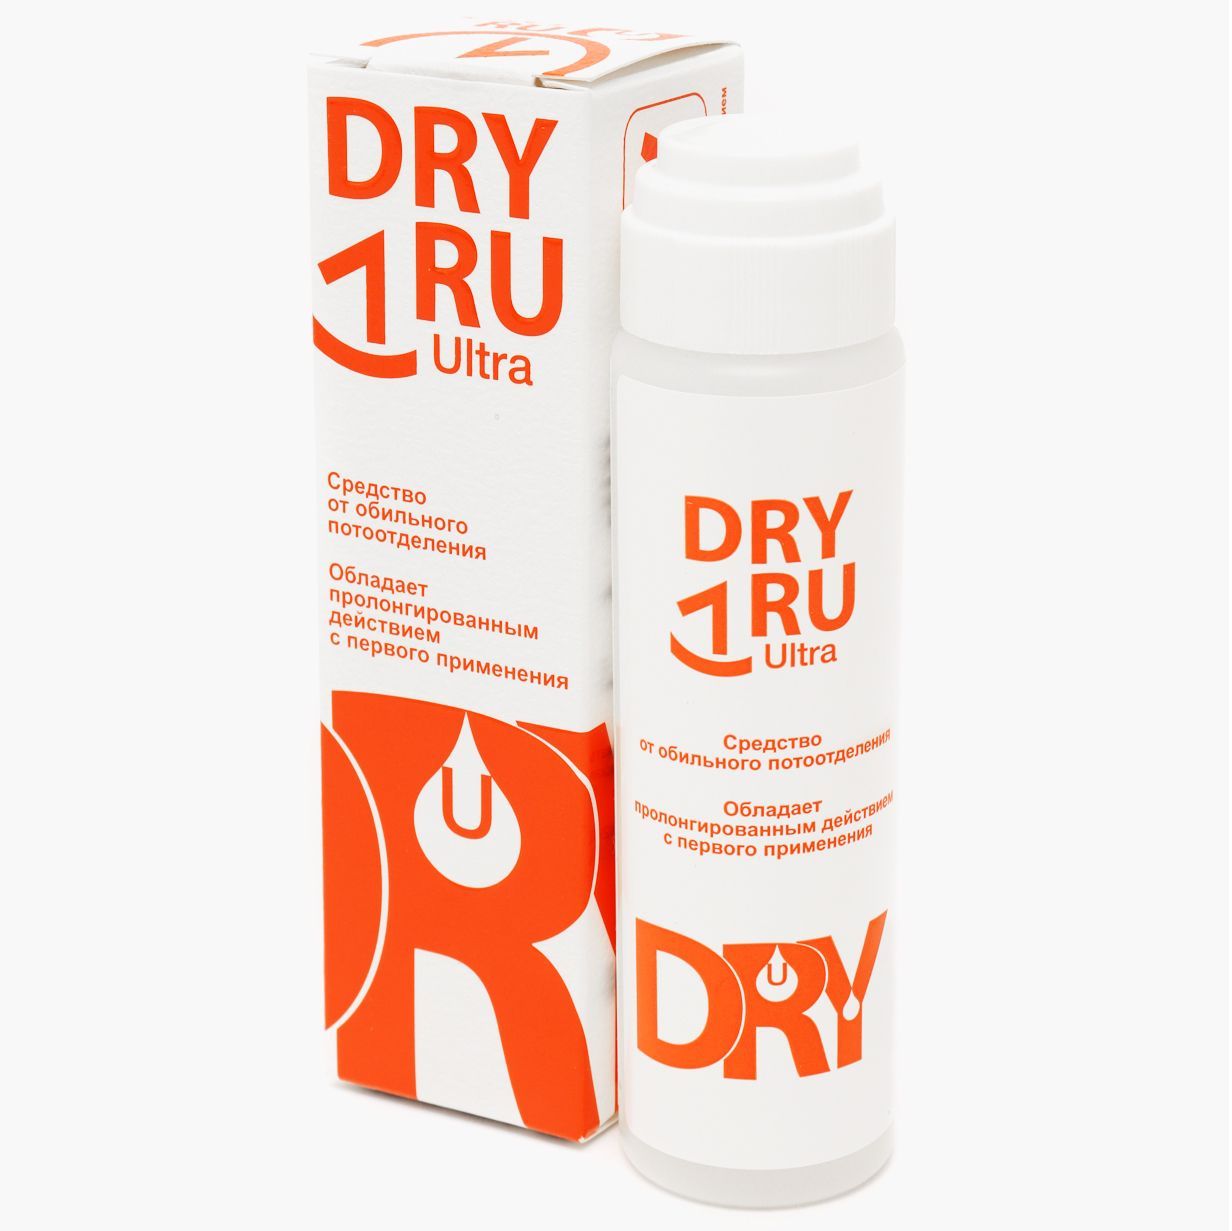 DRYRU Ultra дезодорант фл-аппликатор дабоматик пролонг.действия 50мл. Драй ру ультра. Dry ru. Драй ру ультра оранжевый. Dry ru отзывы